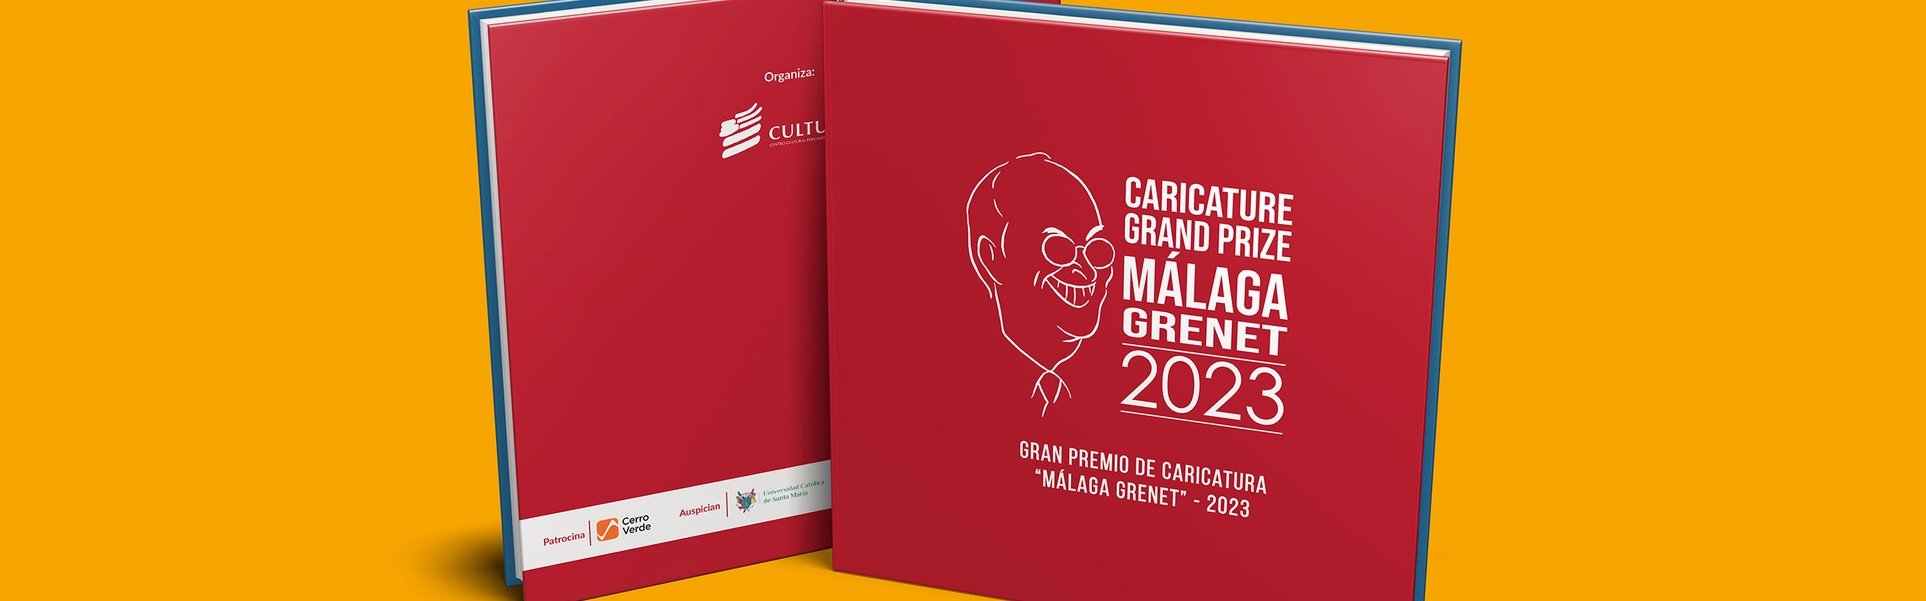 Catalog of the Caricature Grand Prize Málaga Grenet in Peru